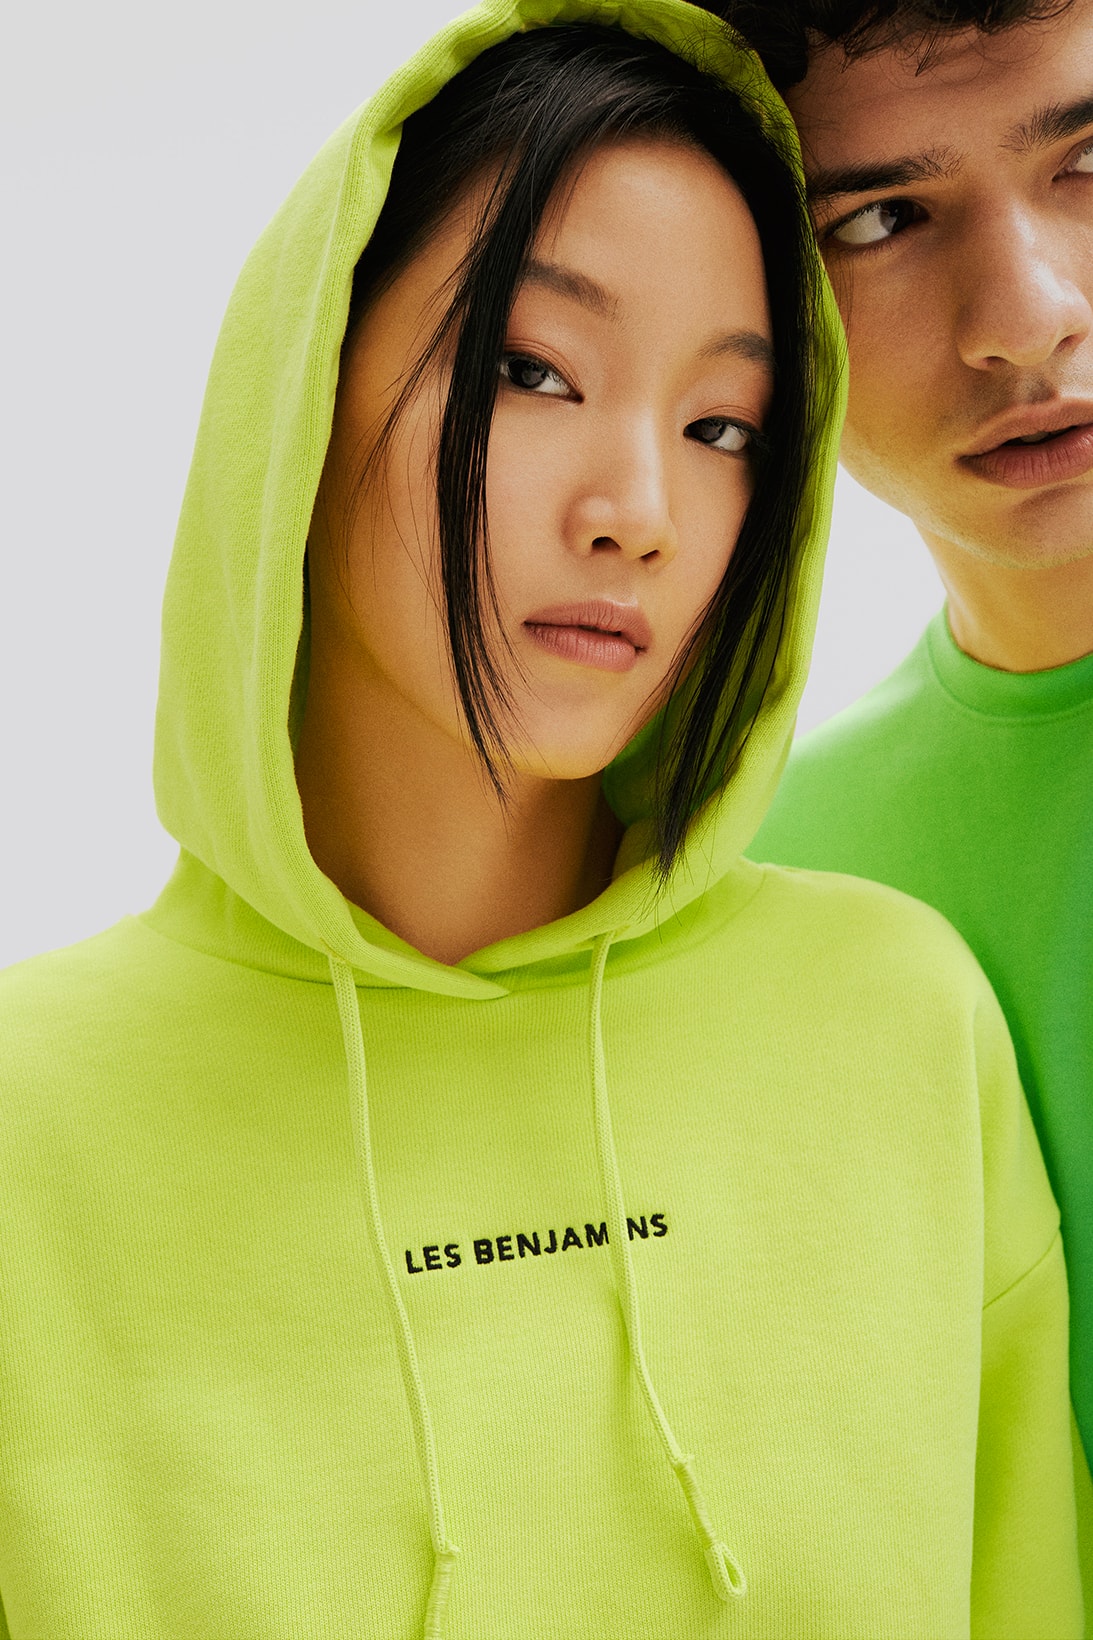 Les Benjamins "Essentials 4.0" Collection Streetwear Hoodies Sweatpants Kermit Green